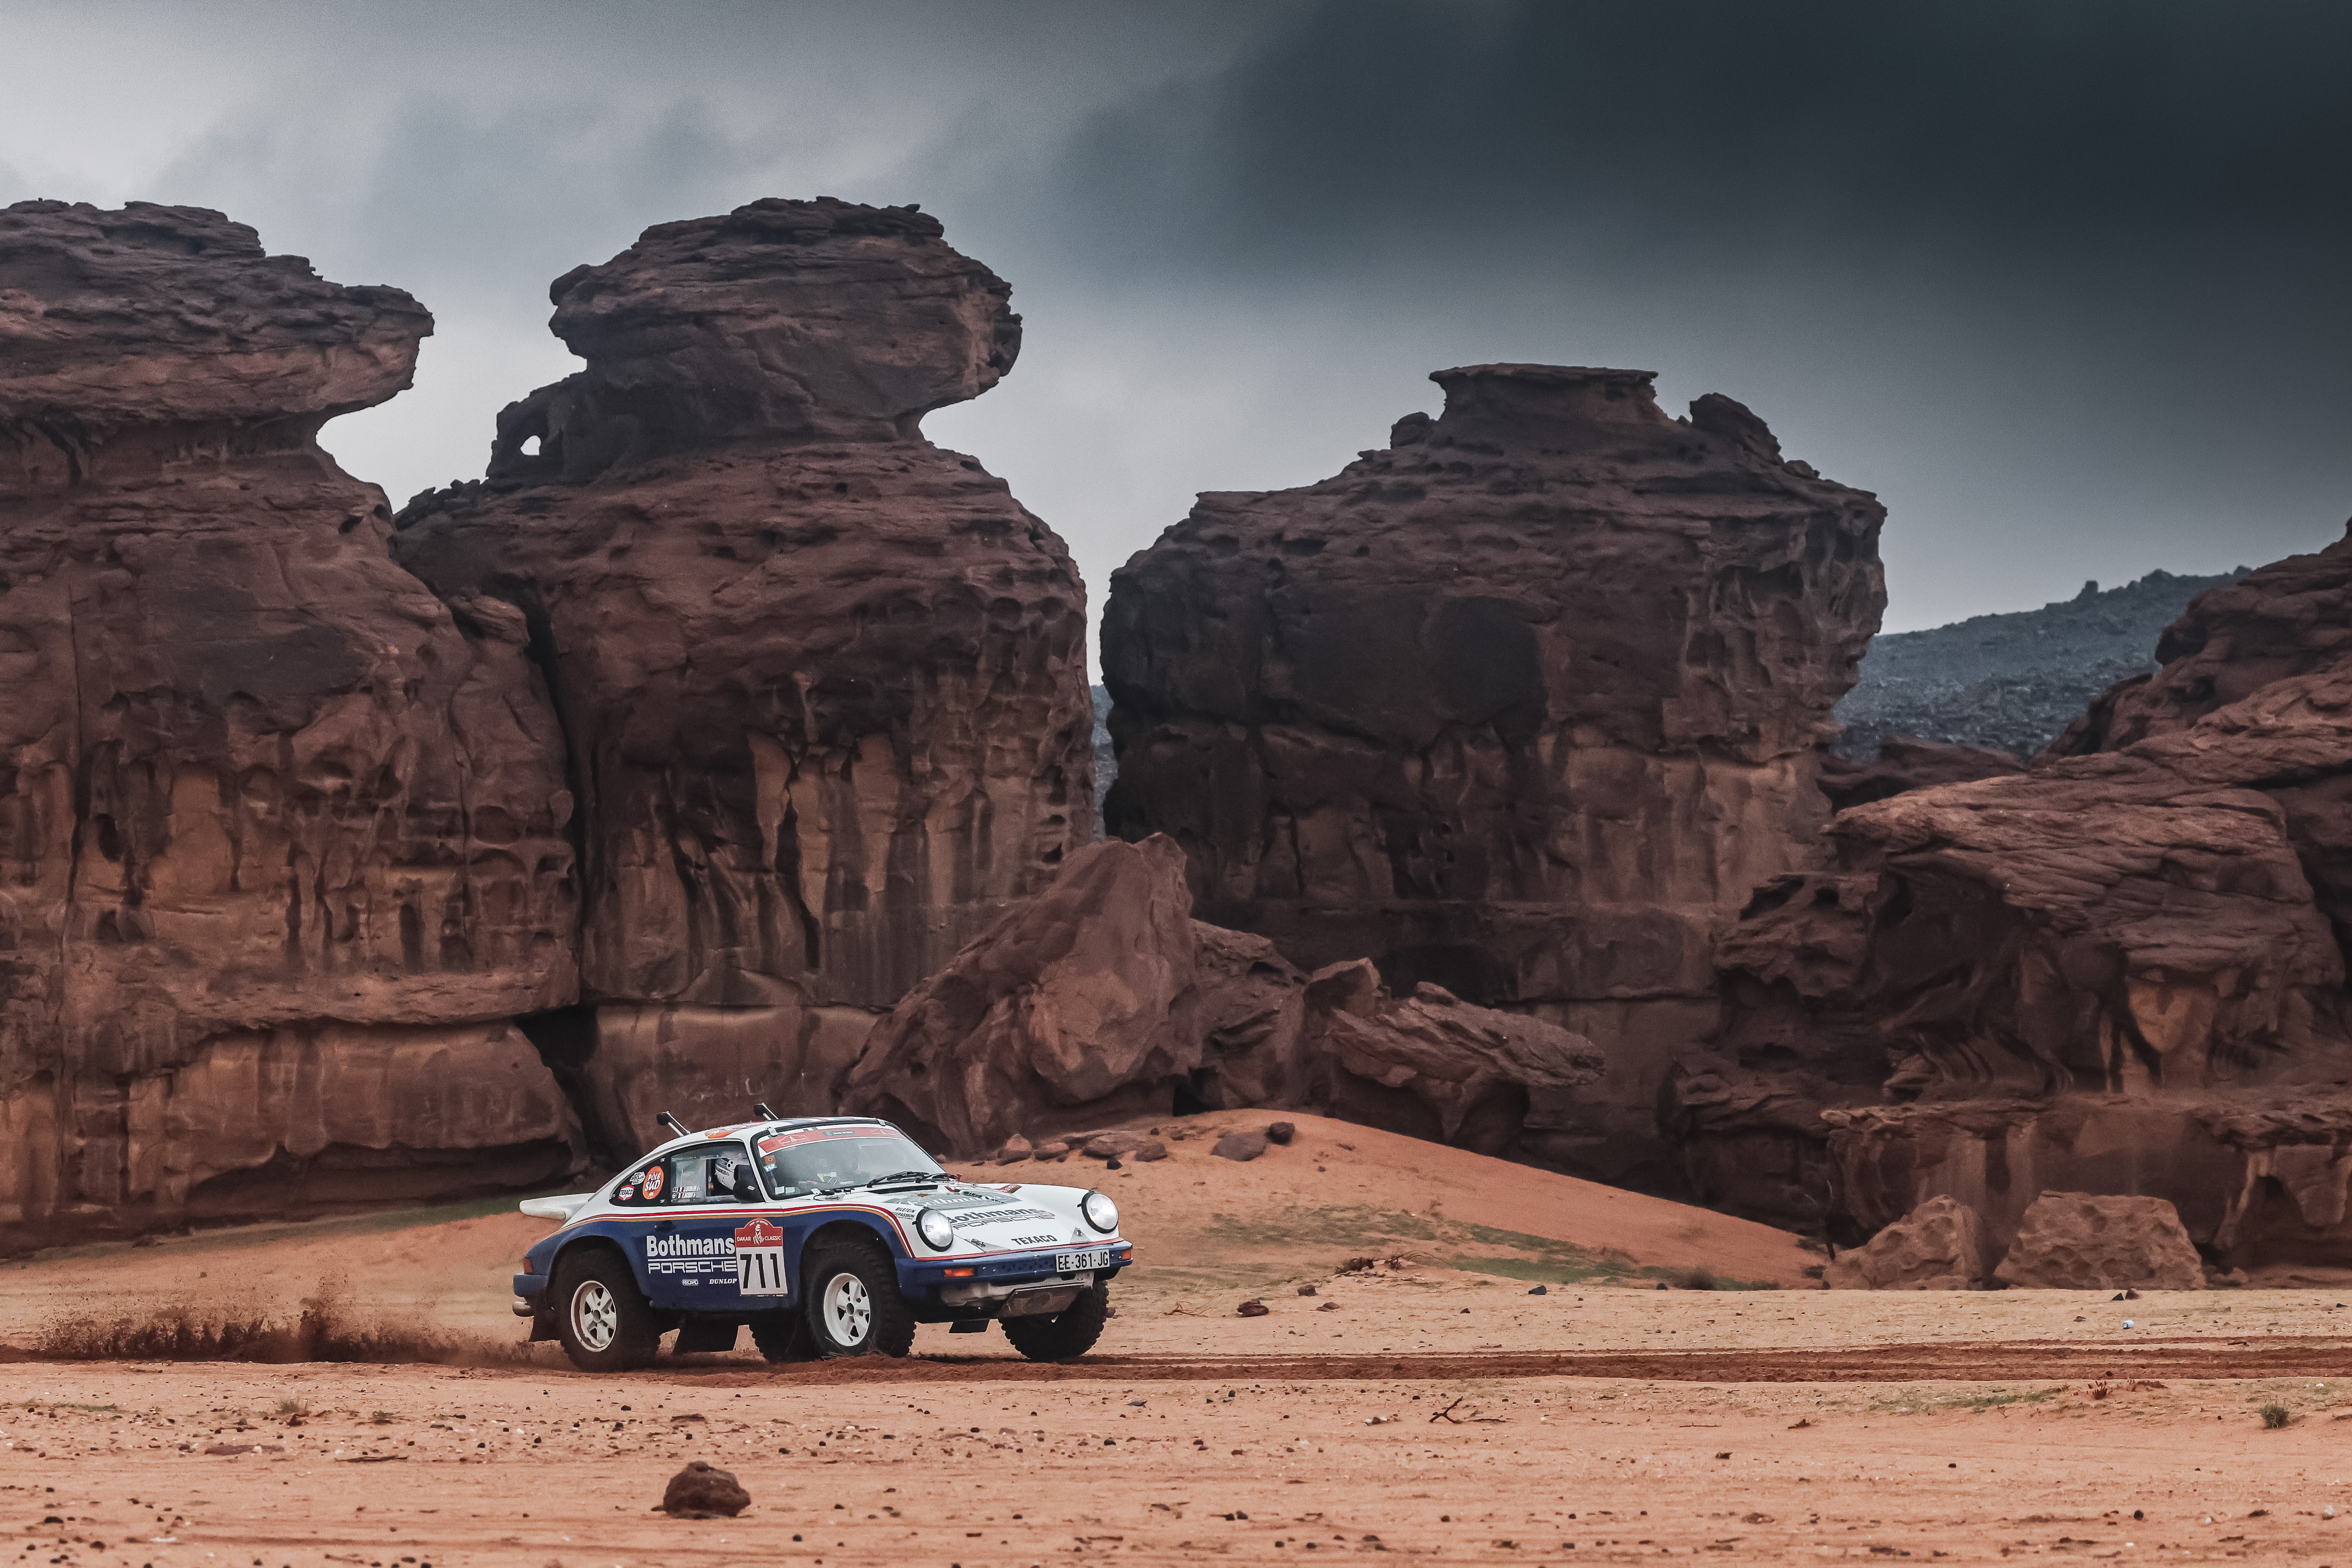 Porsche 911 Carrera 3.2 4x4 Paris Dakar (953) in desert